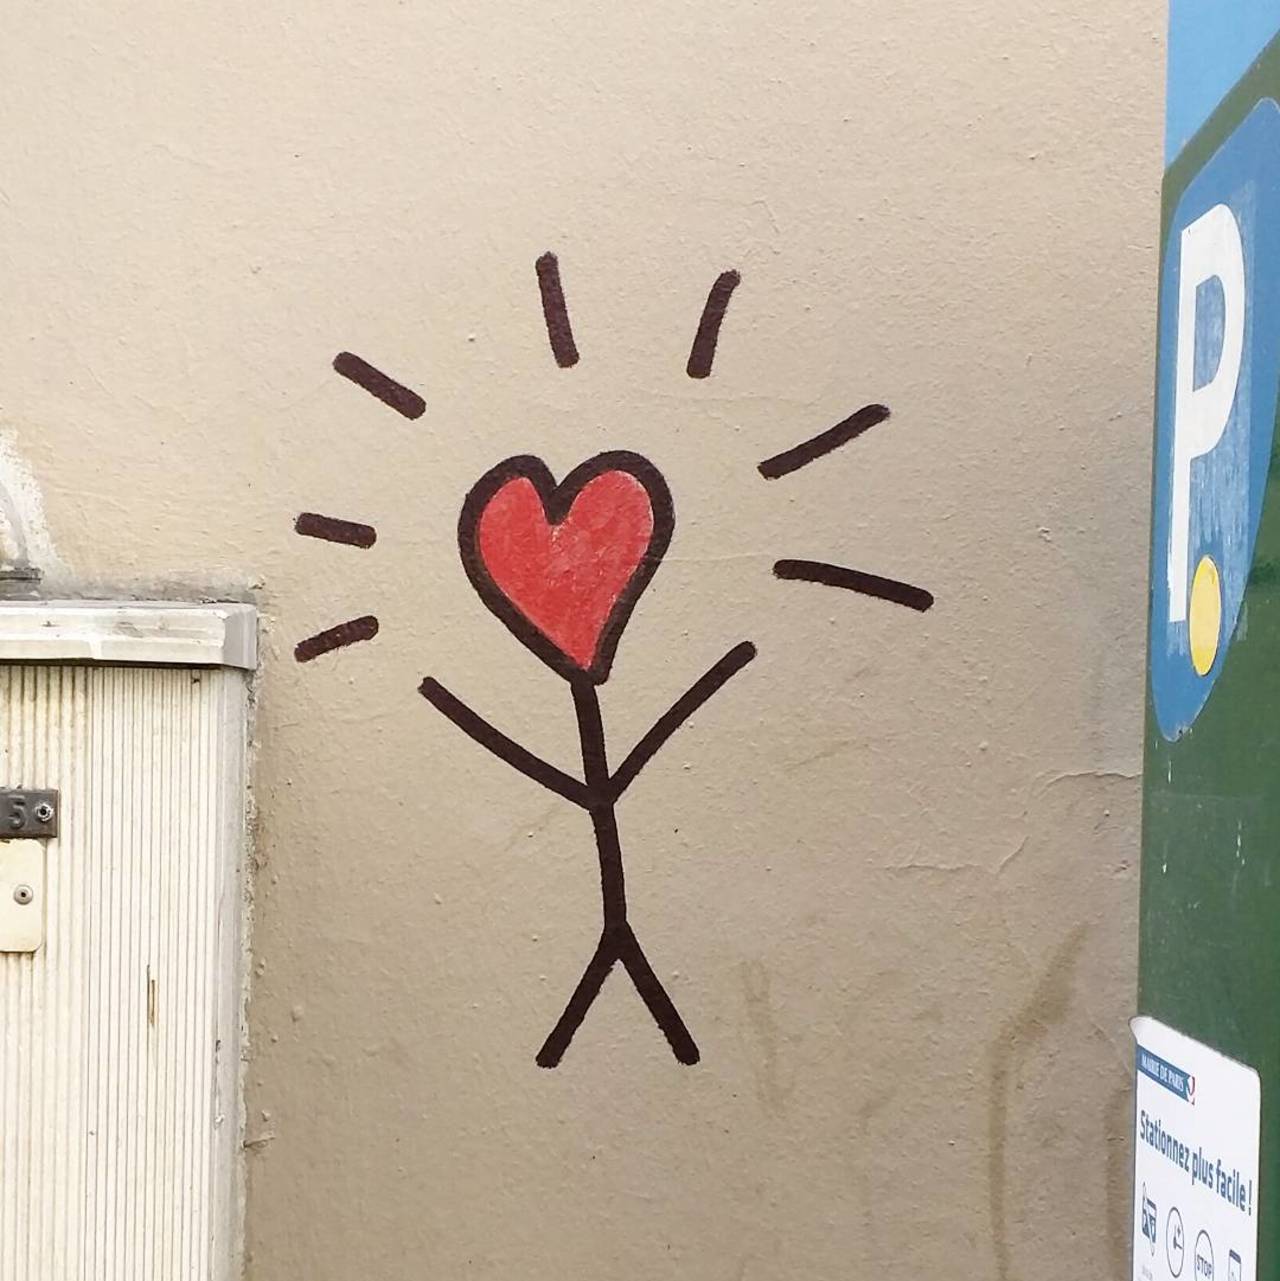 #Paris #graffiti photo by @alphaquadra http://ift.tt/1ZzCKYo #StreetArt http://t.co/pgJeWUOaMv